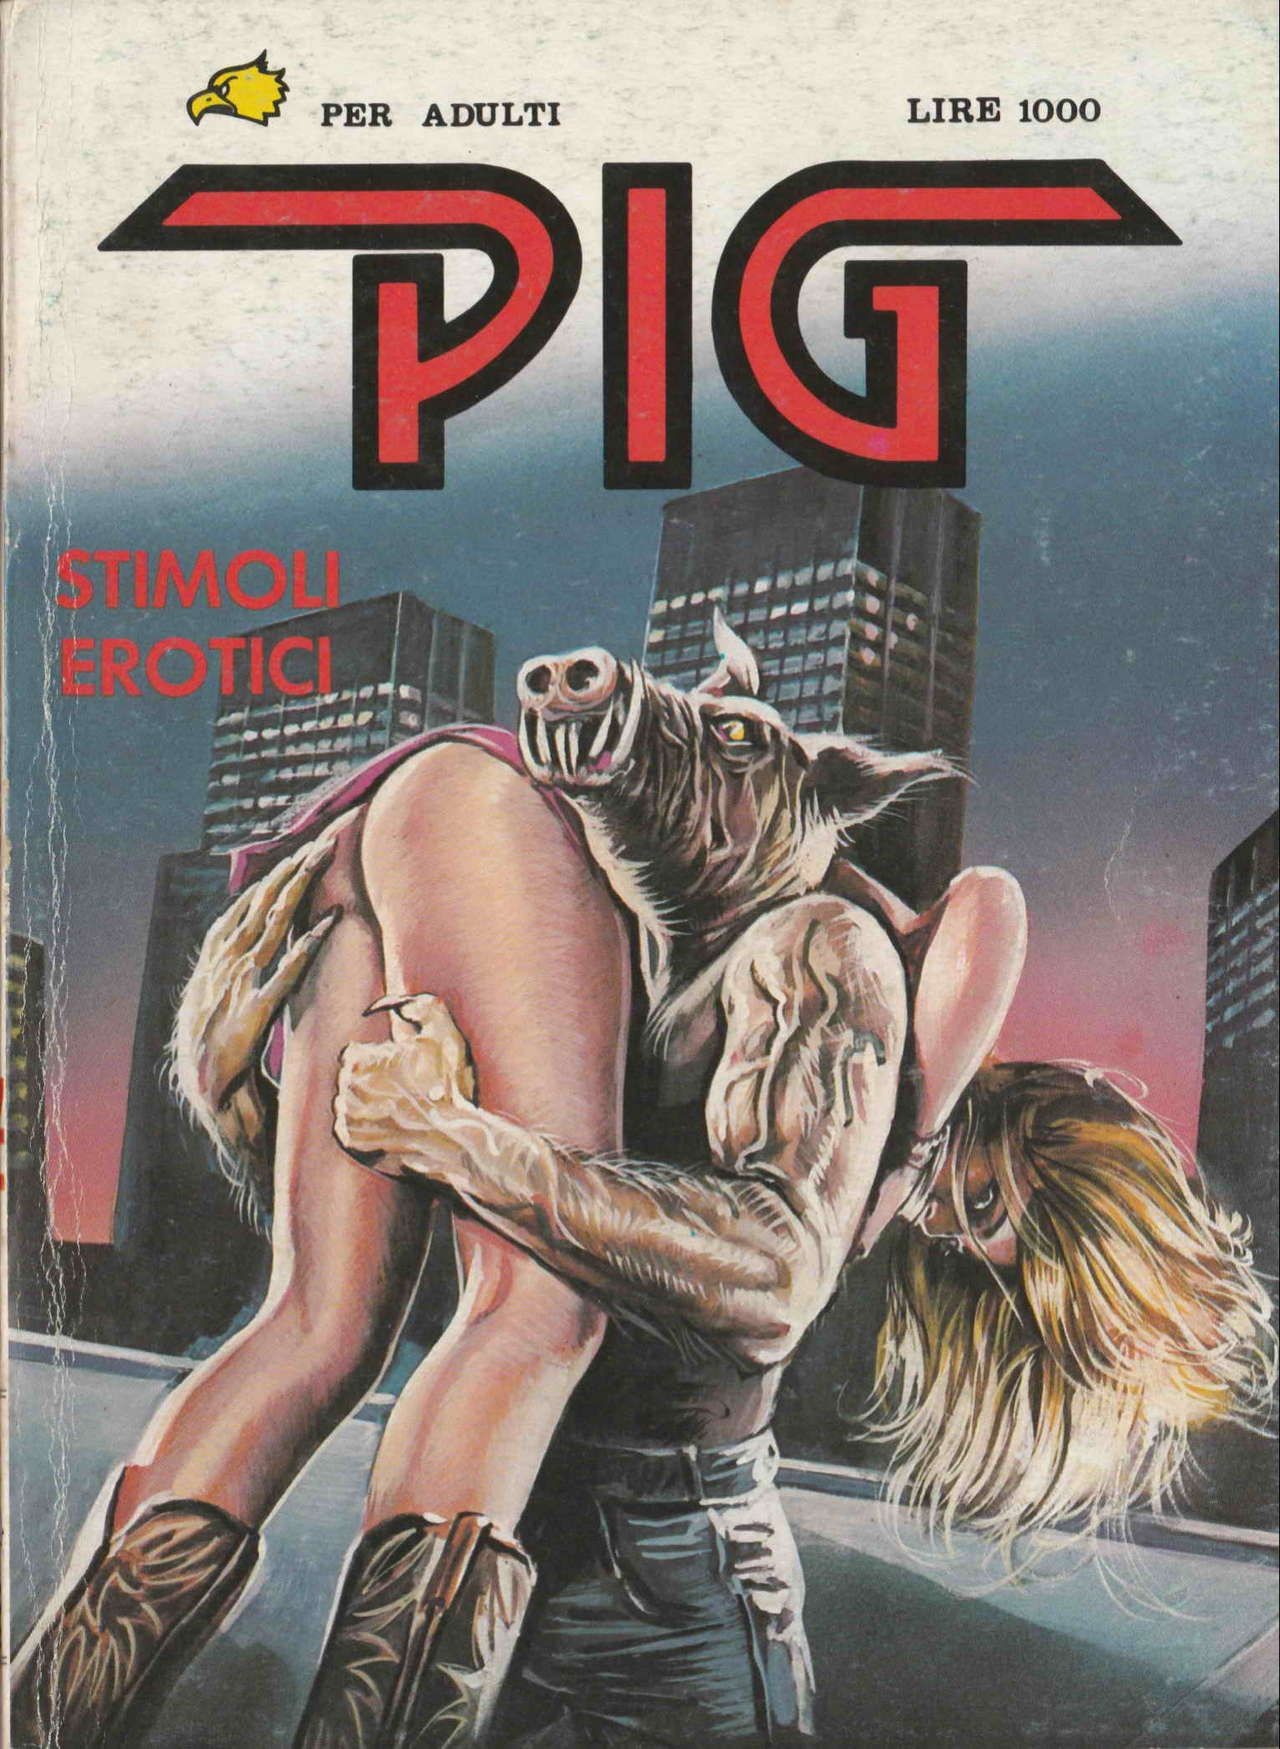 Wife (Pig 17) Stimoli Erotici [Italian] Leche